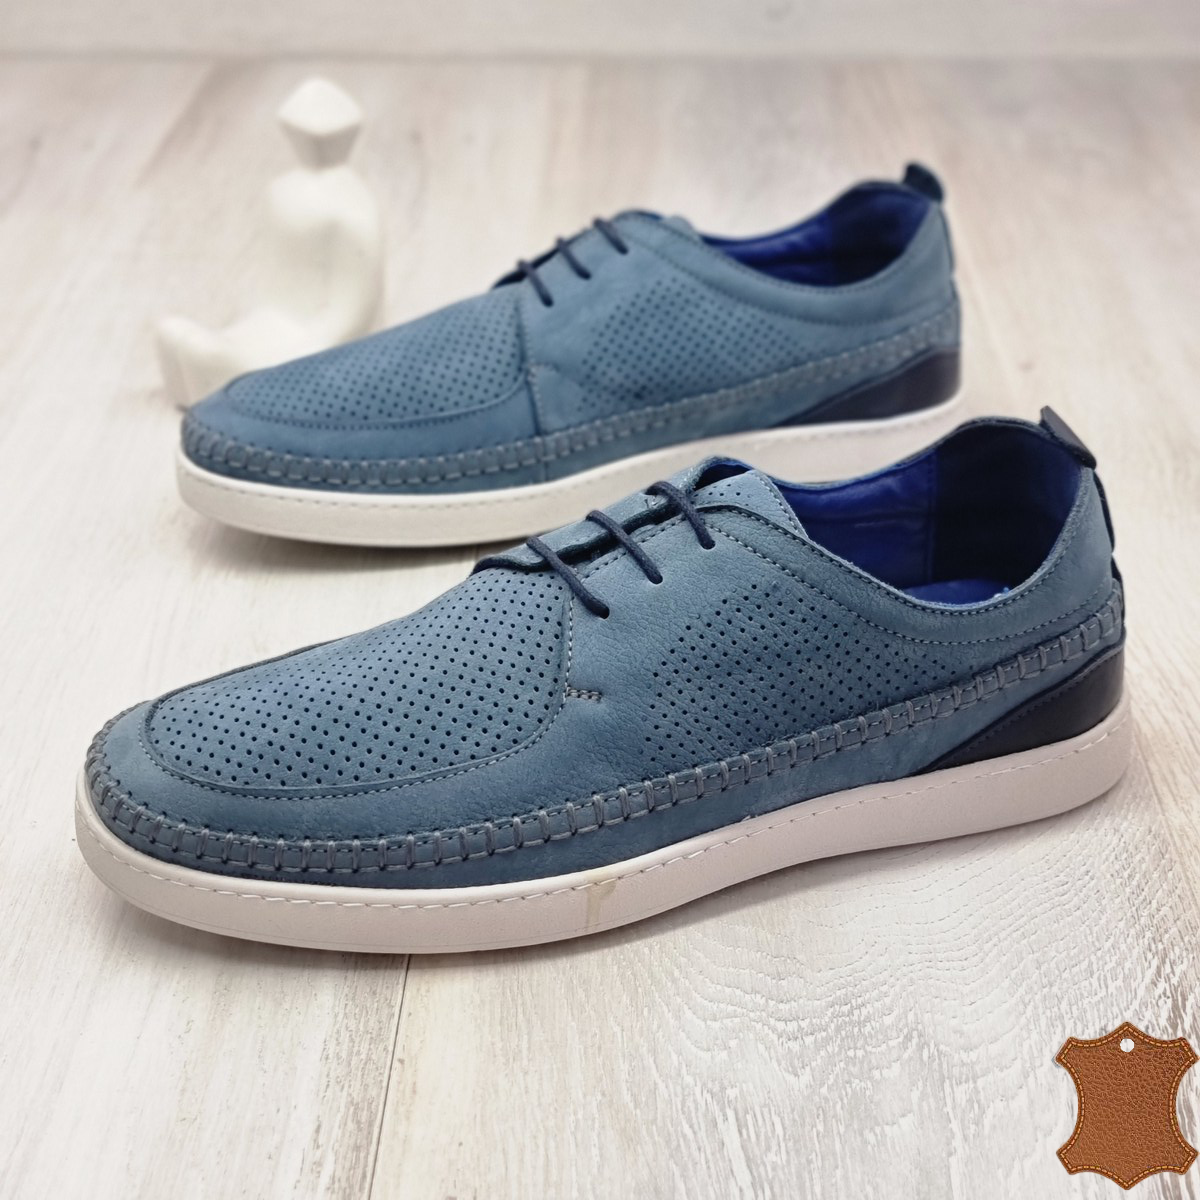 Pantofi barbat bleu piele naturala walker